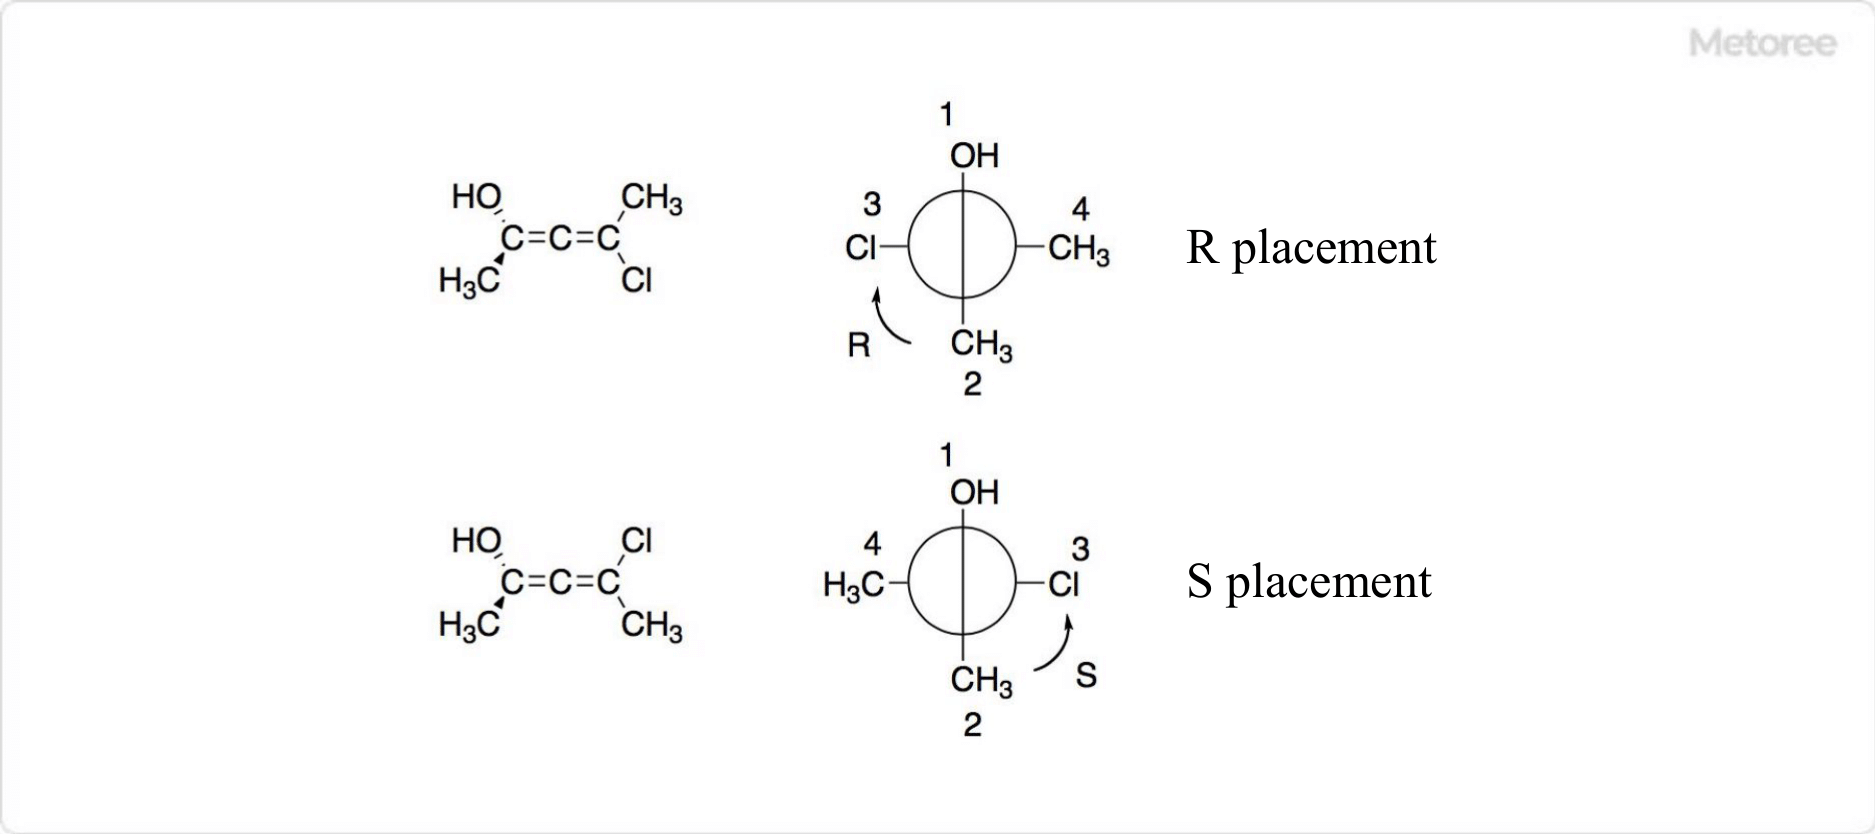 Figure 3: Isomers of Allene